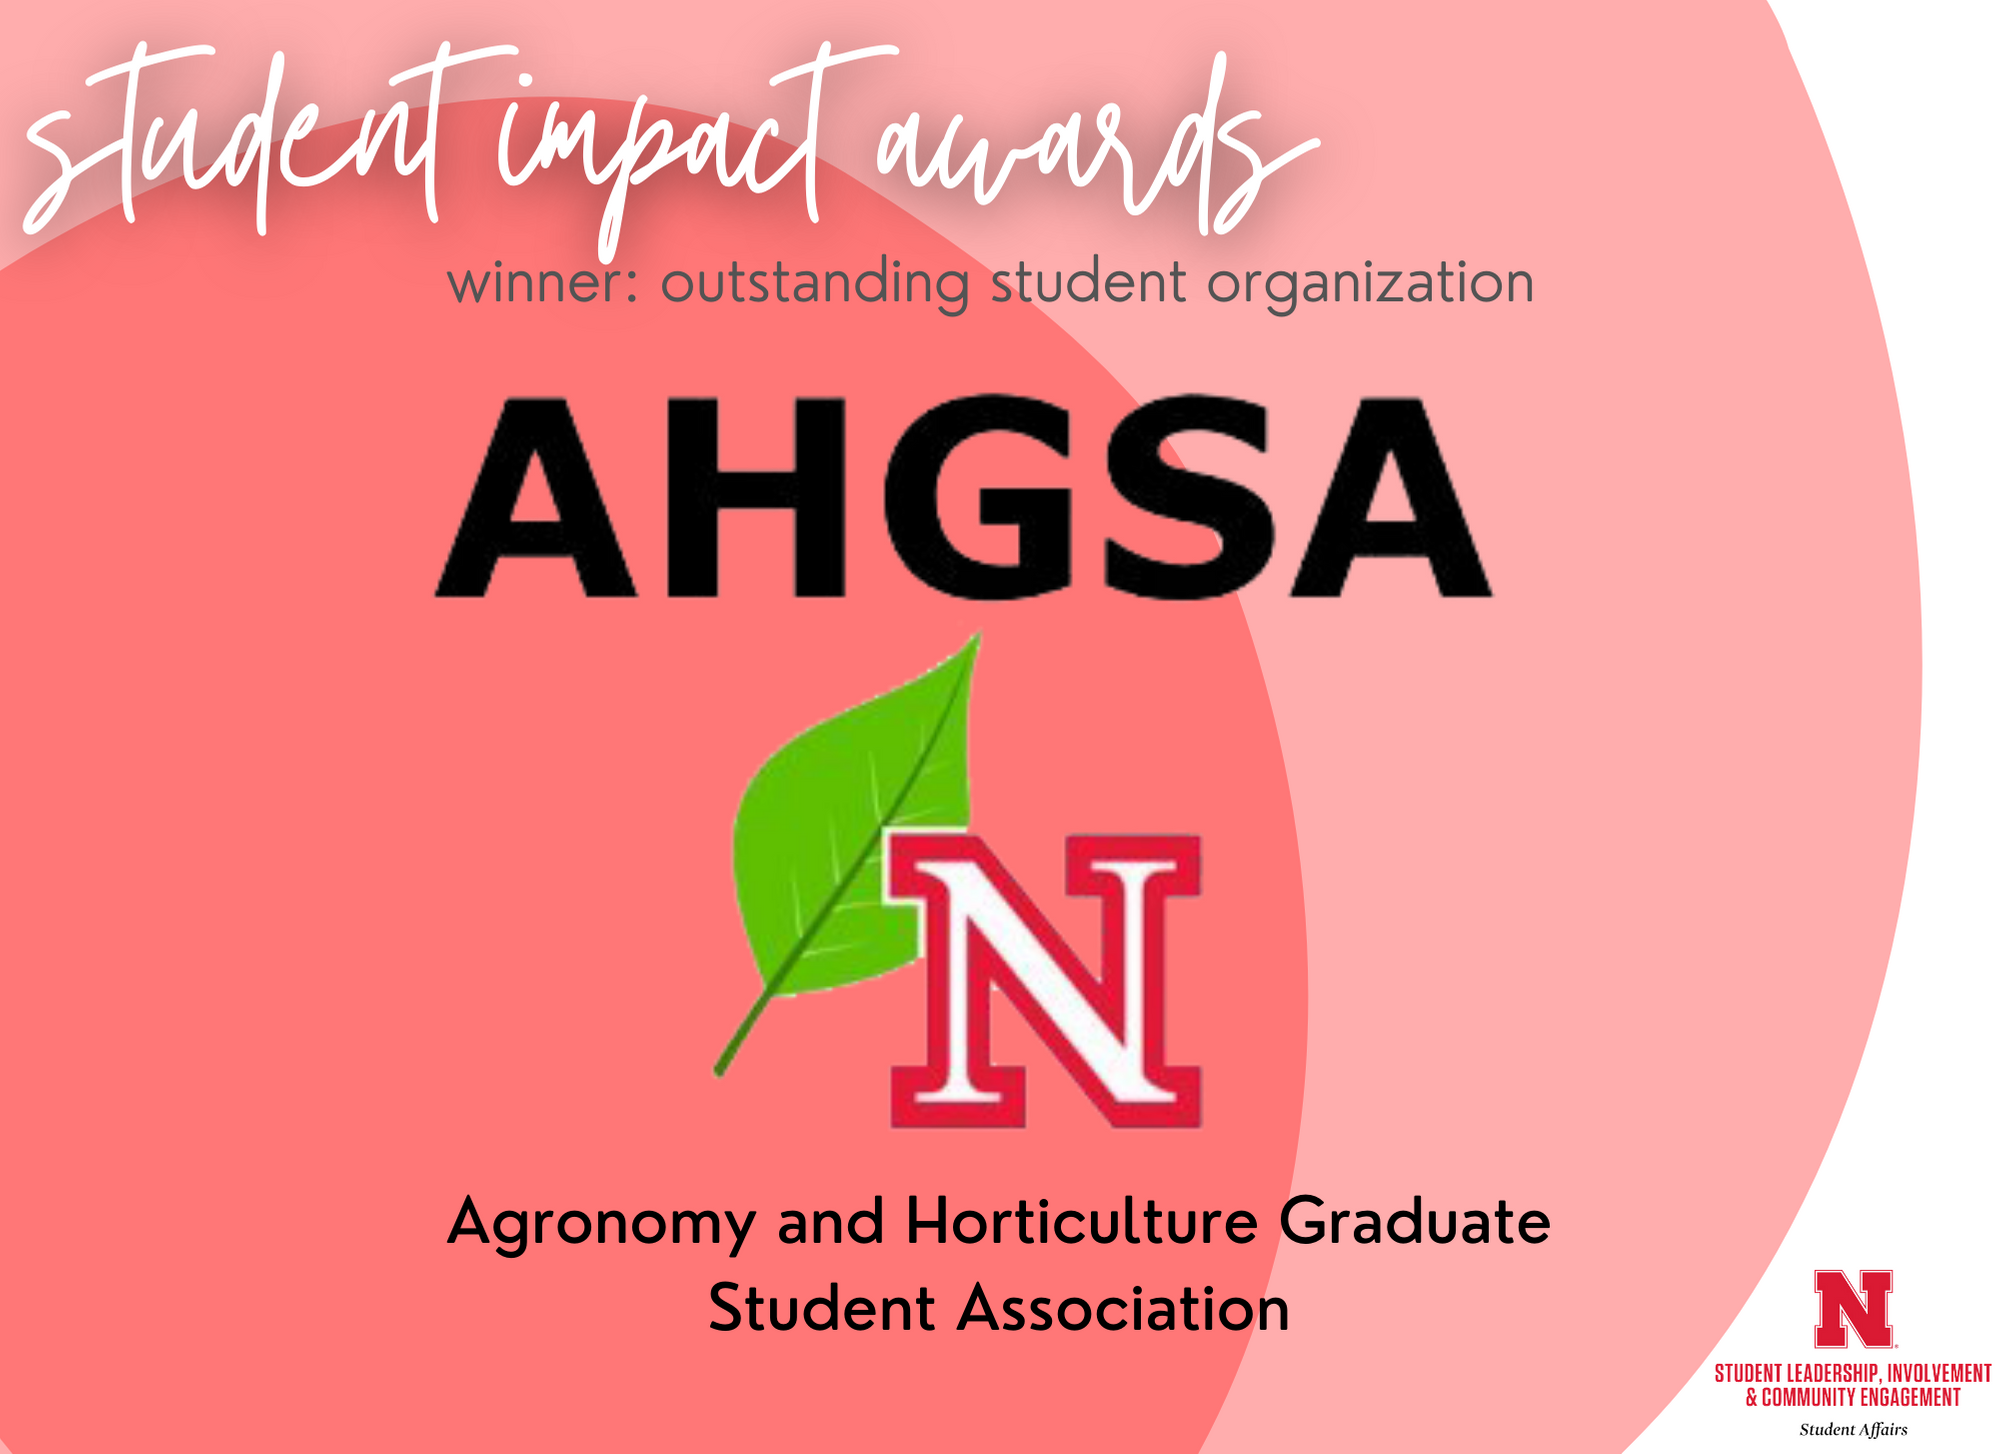 Outstanding Student Organization: AHGSA